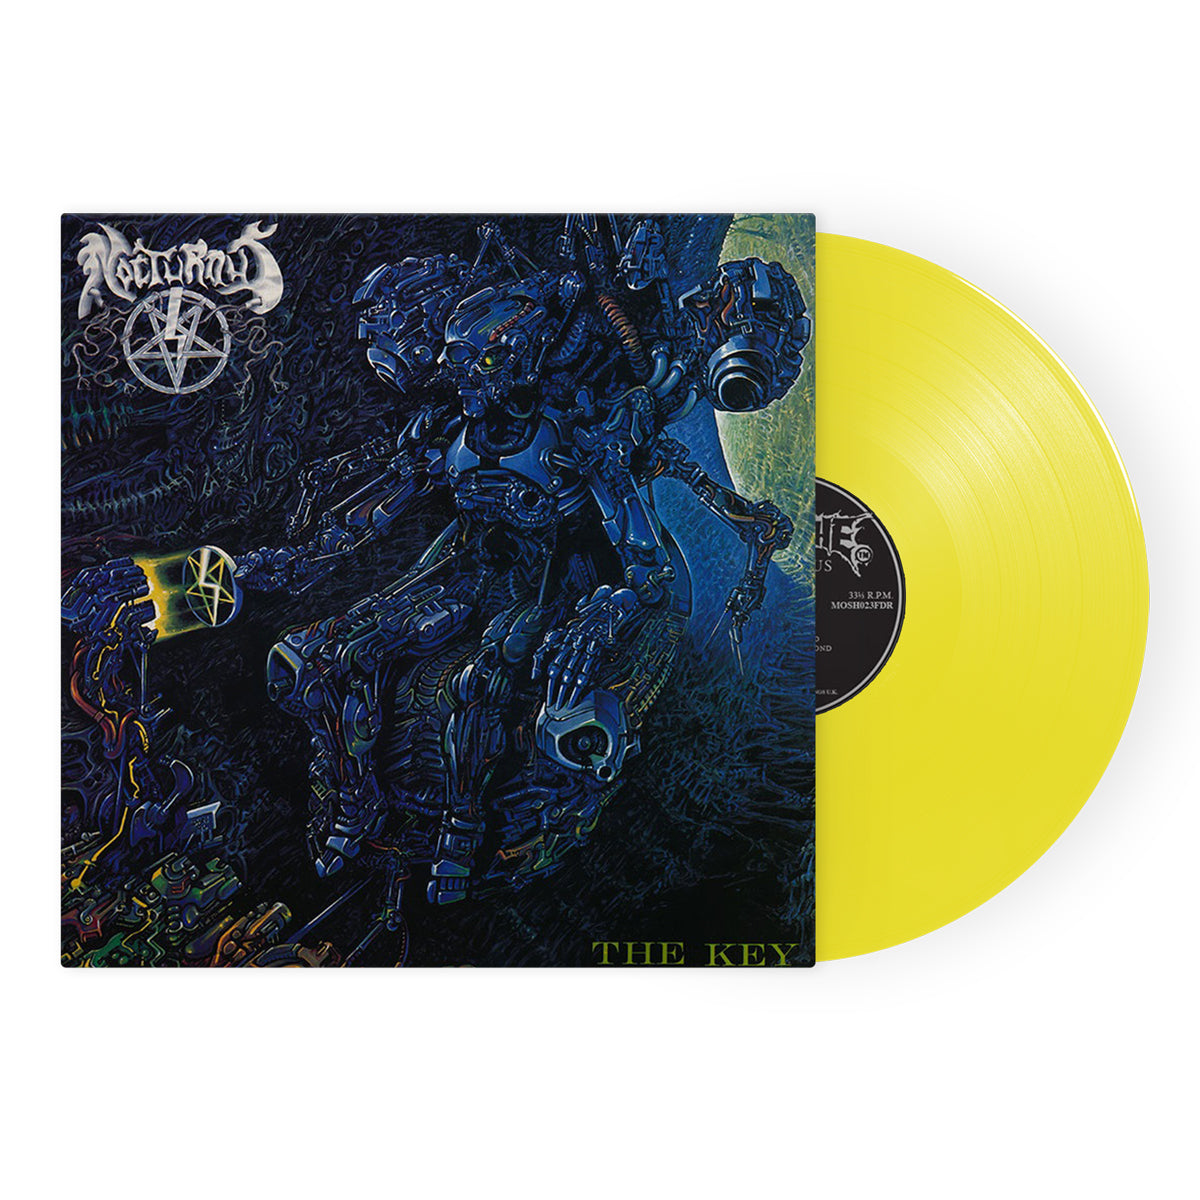 Nocturnus "The Key" FDR Yellow Vinyl (Ltd to 300 Copies)